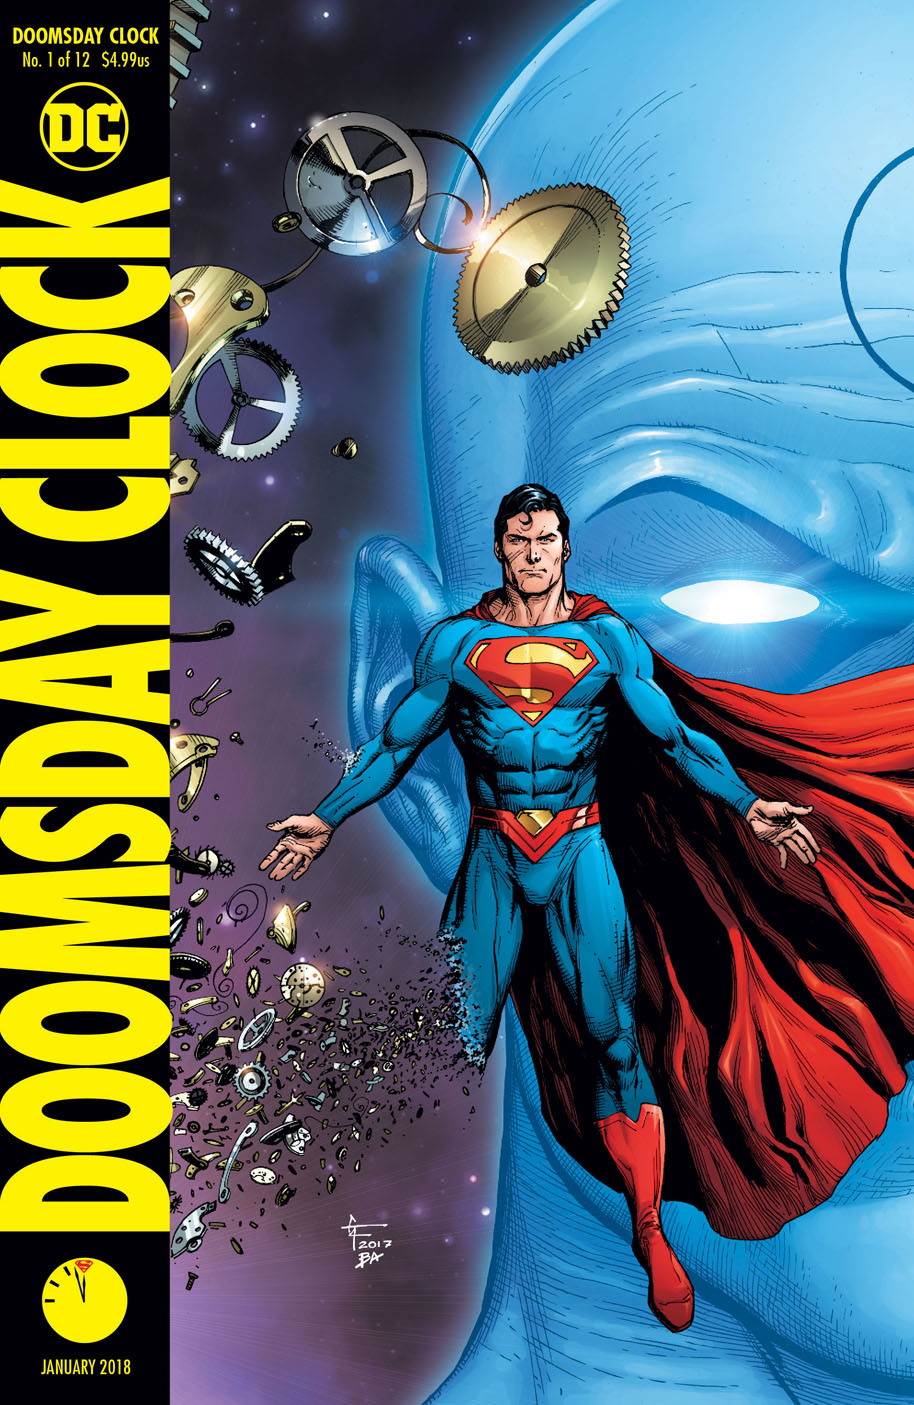 940 -  [DC COMICS] Publicaciones Universo DC: Discusión General v2 - Página 10 Variant-cover-of-doomsday-clock-1-with-superman-and-doctor-manhattan